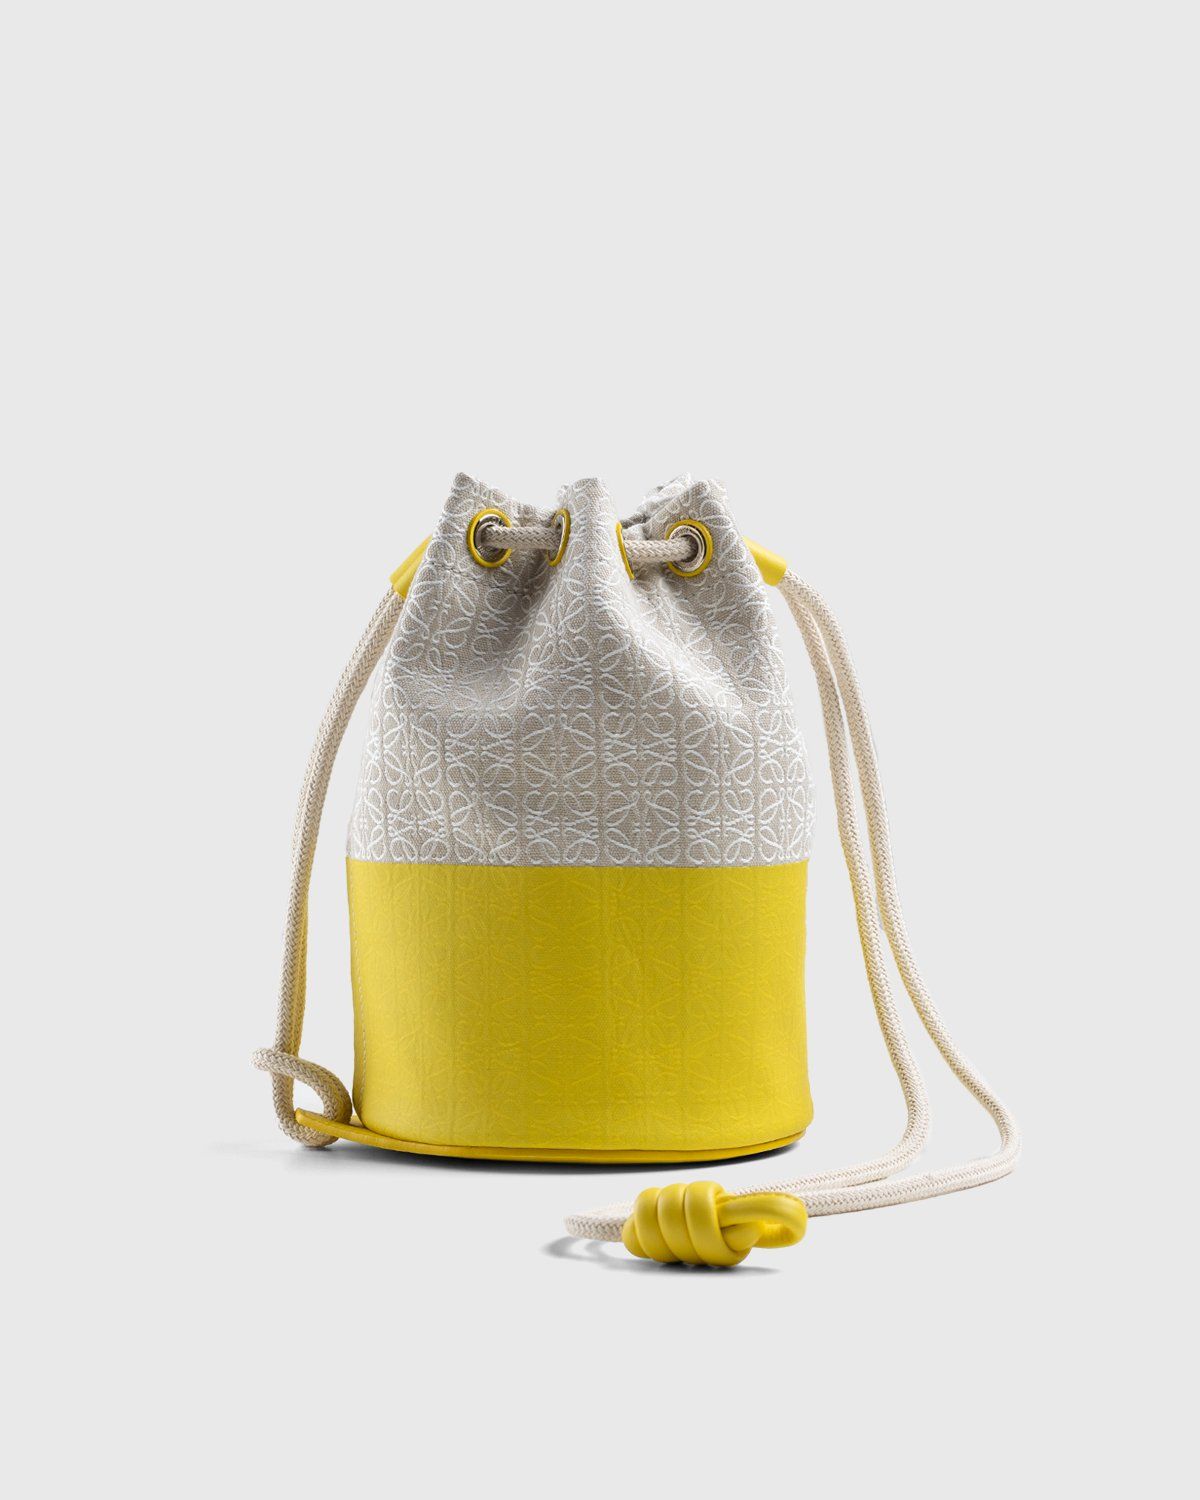 Loewe – Paula's Ibiza Small Sailor Bag Ecru/Lemon - Bags - Yellow - Image 2